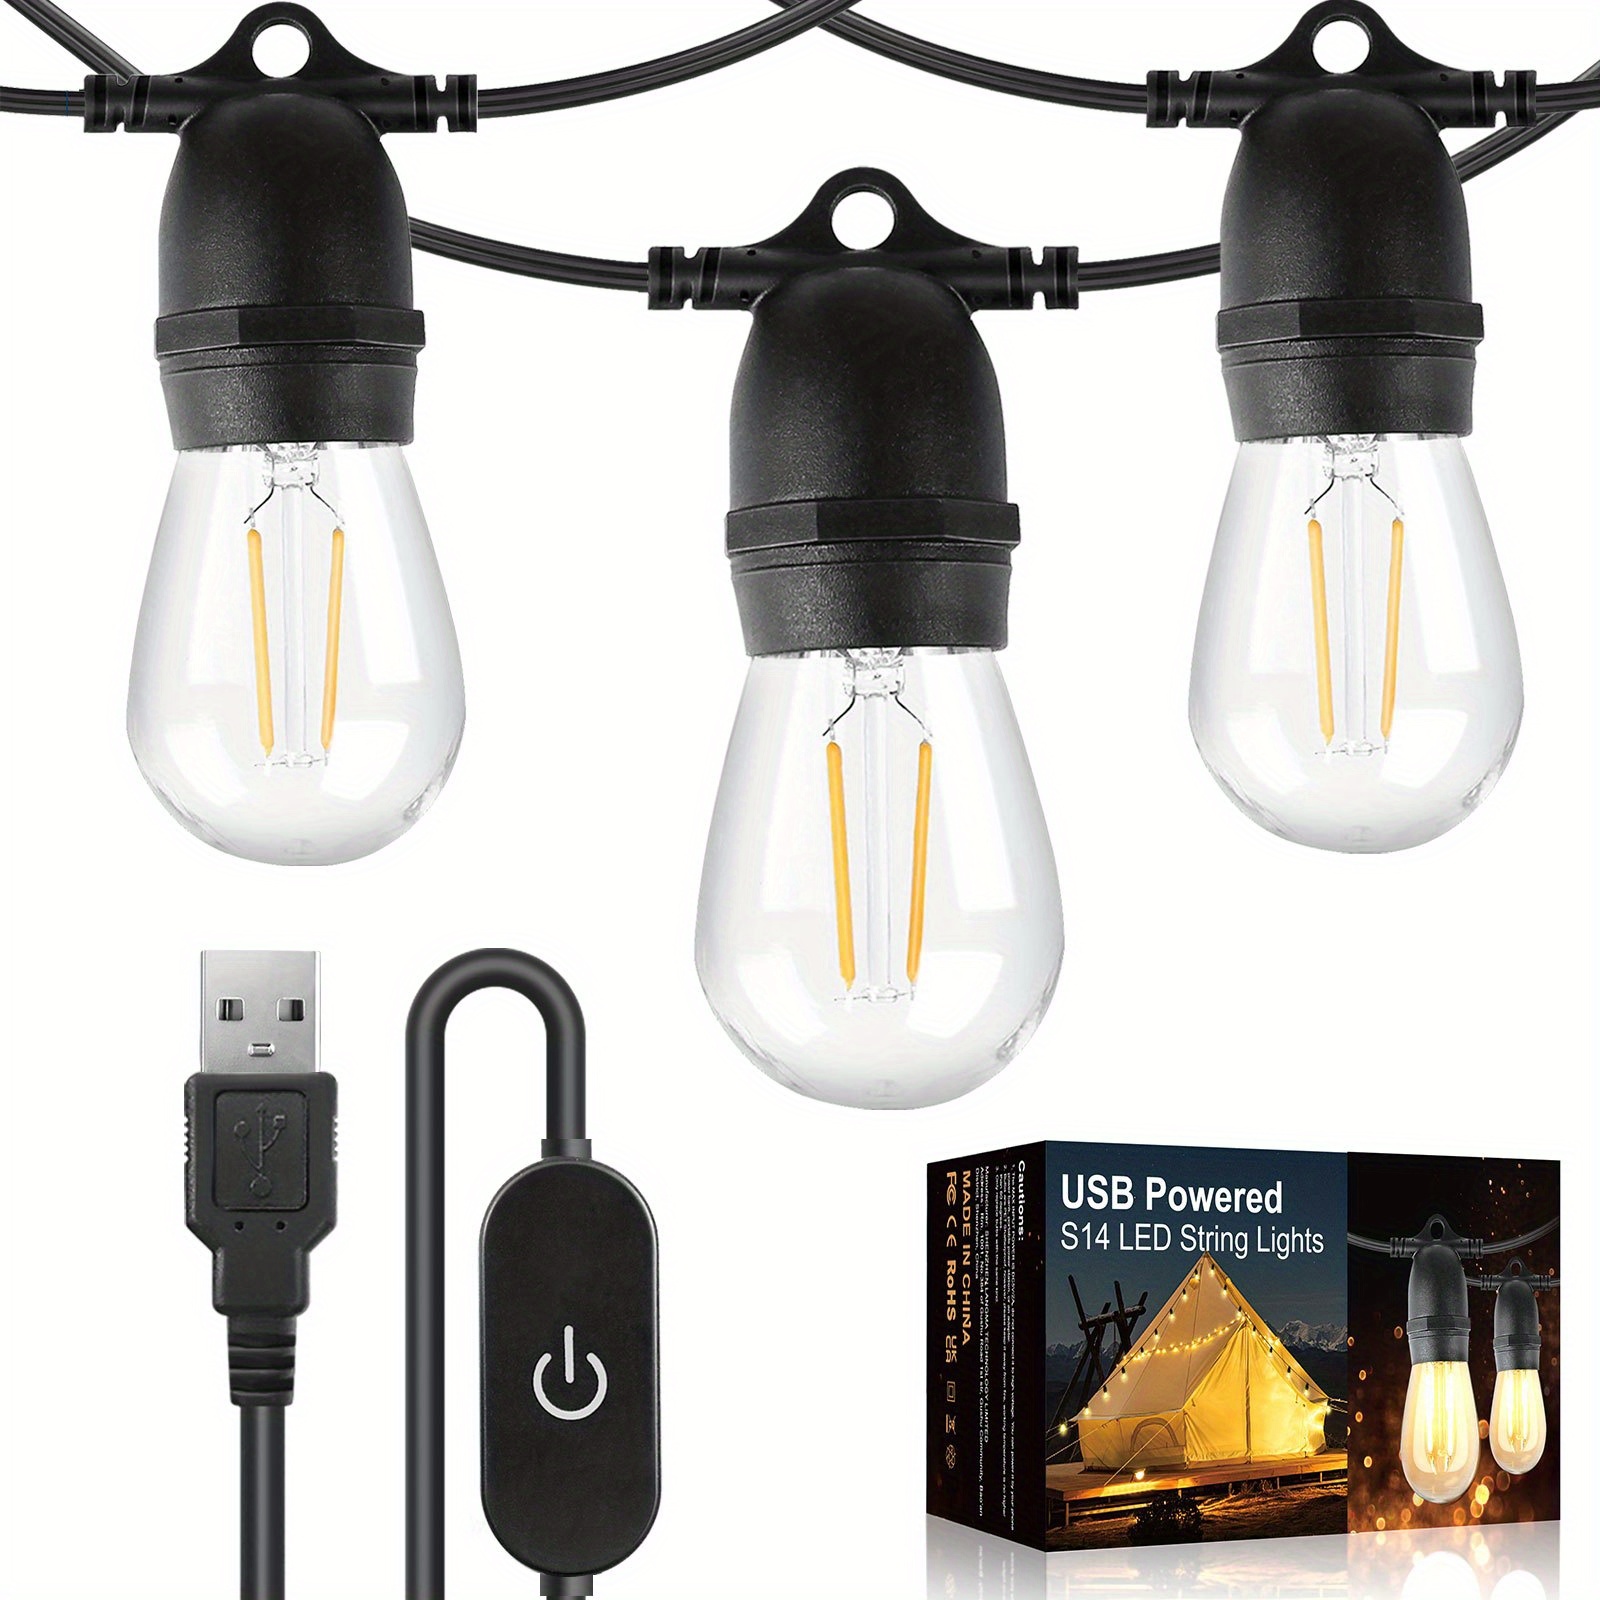 Lámparas recargables ideales para emergencias o para acampar - Ecosbox